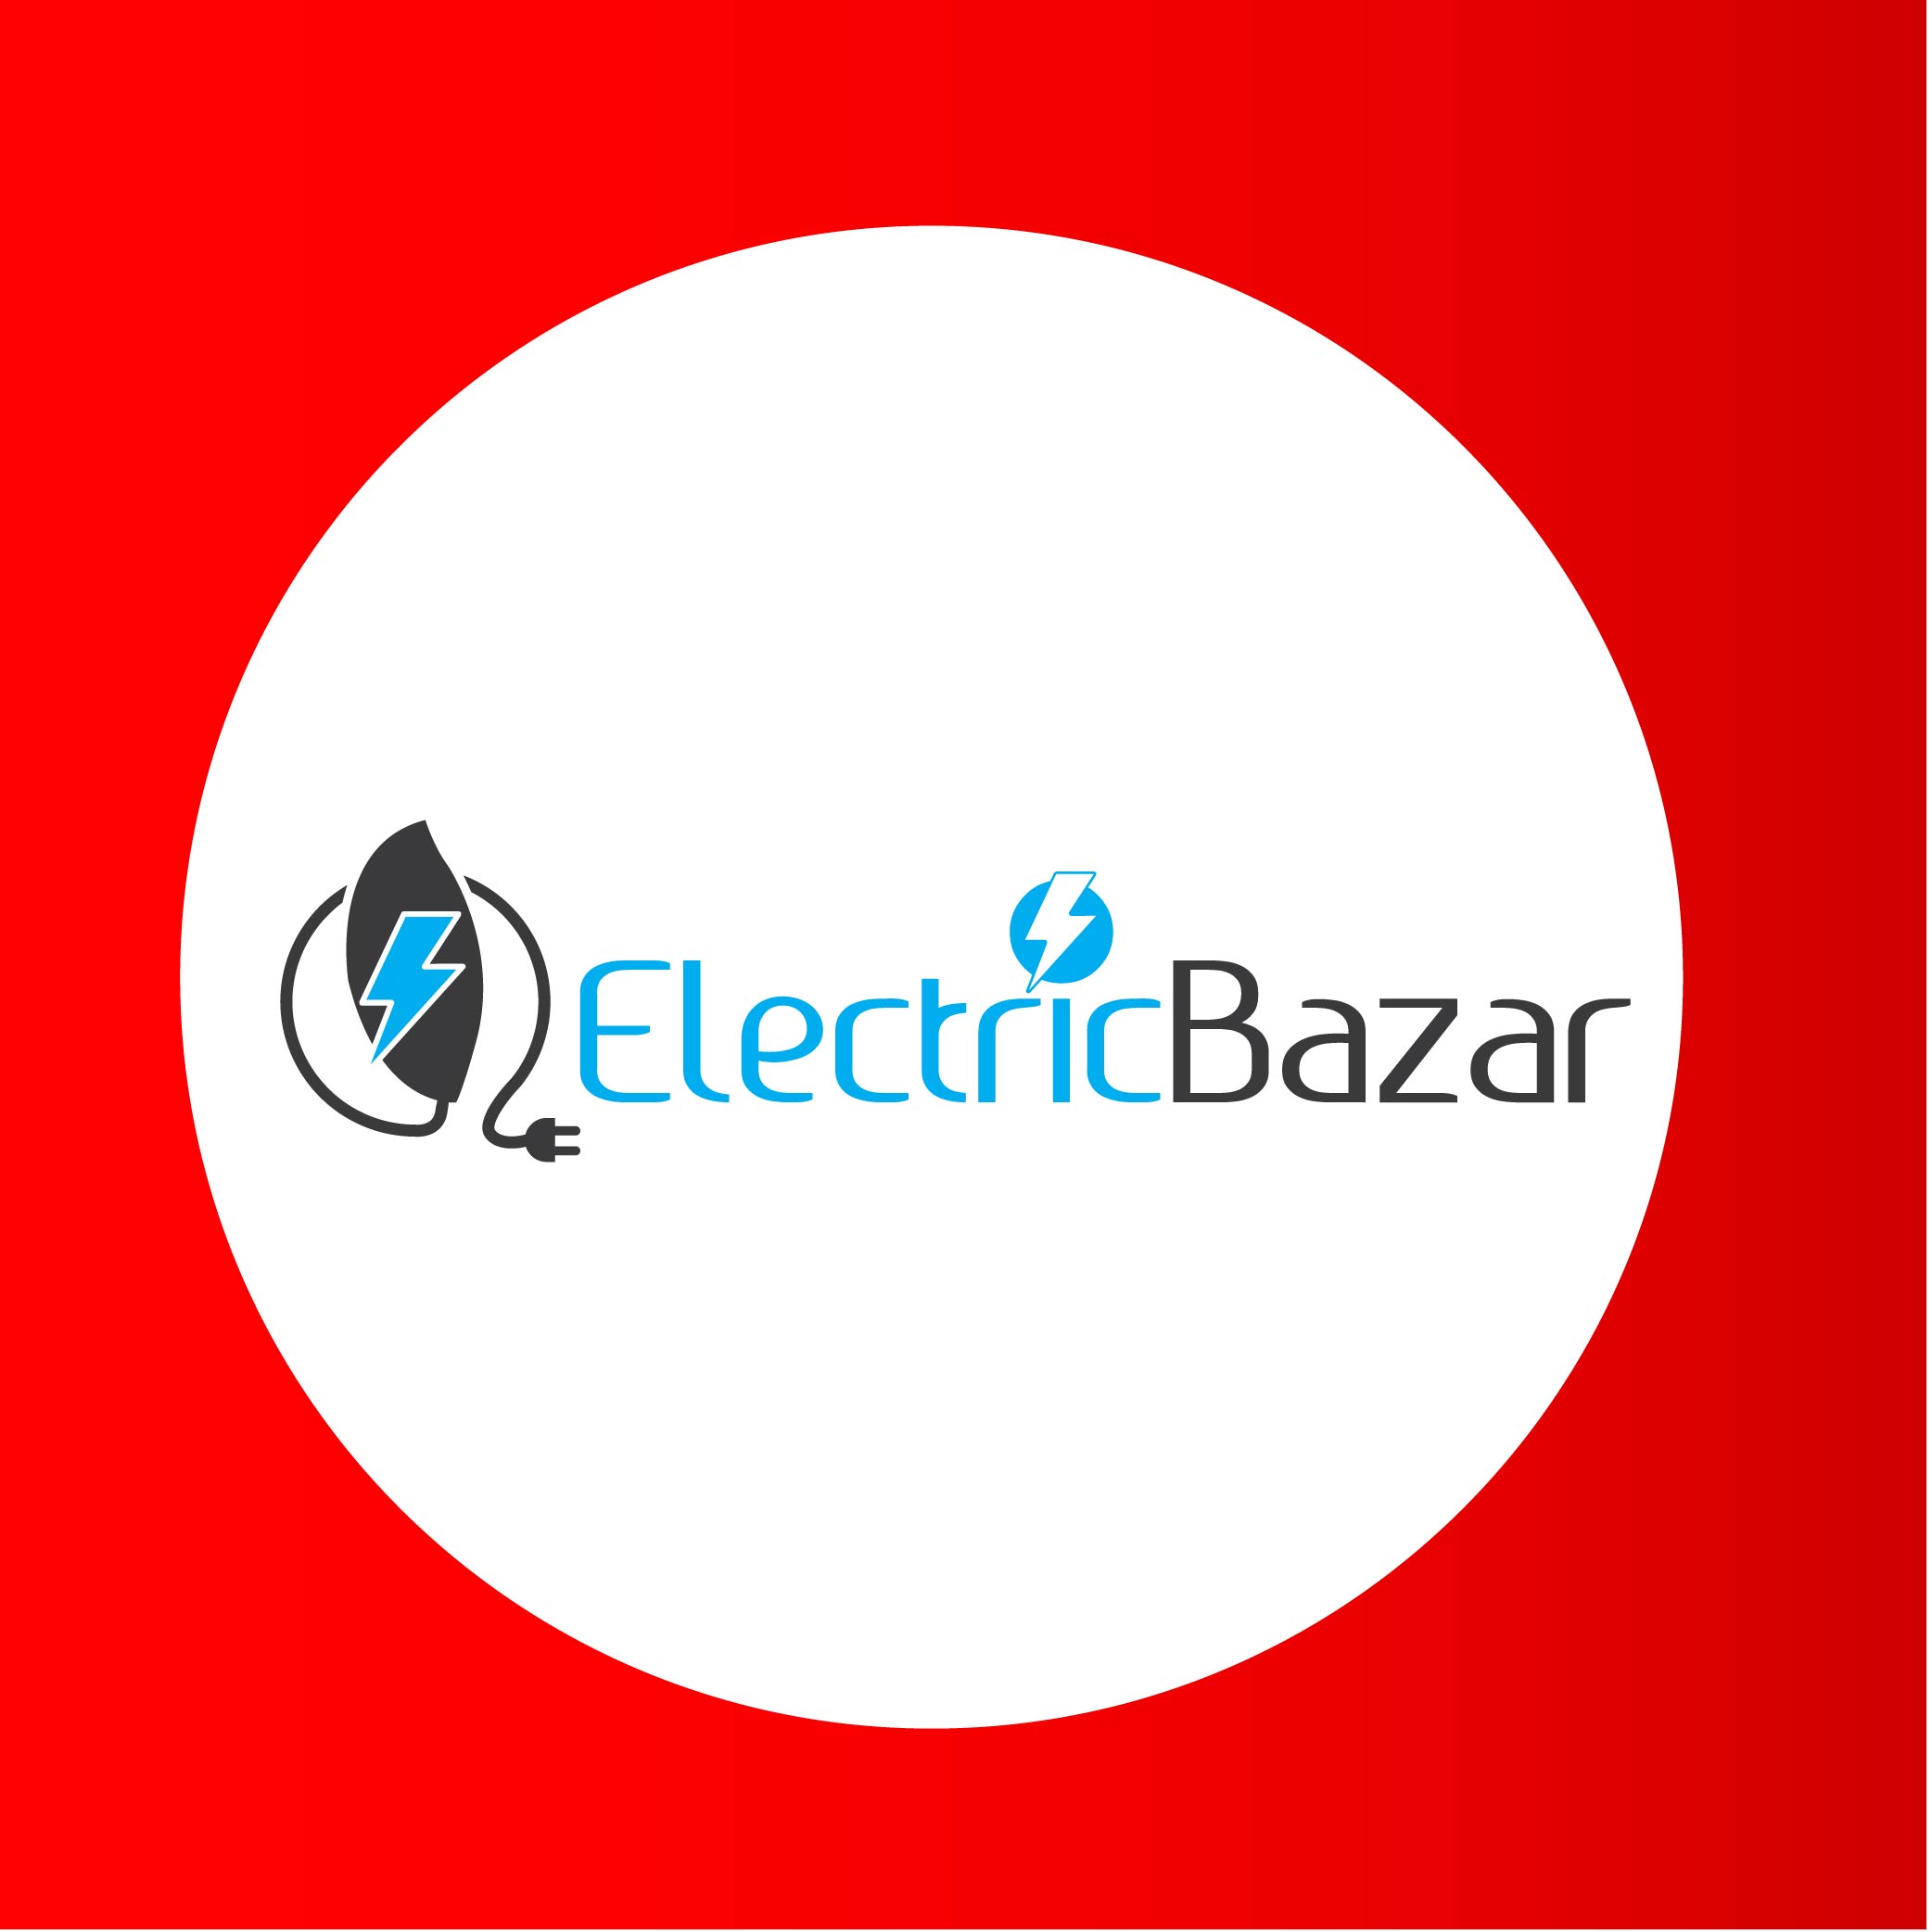 Electric Bazar